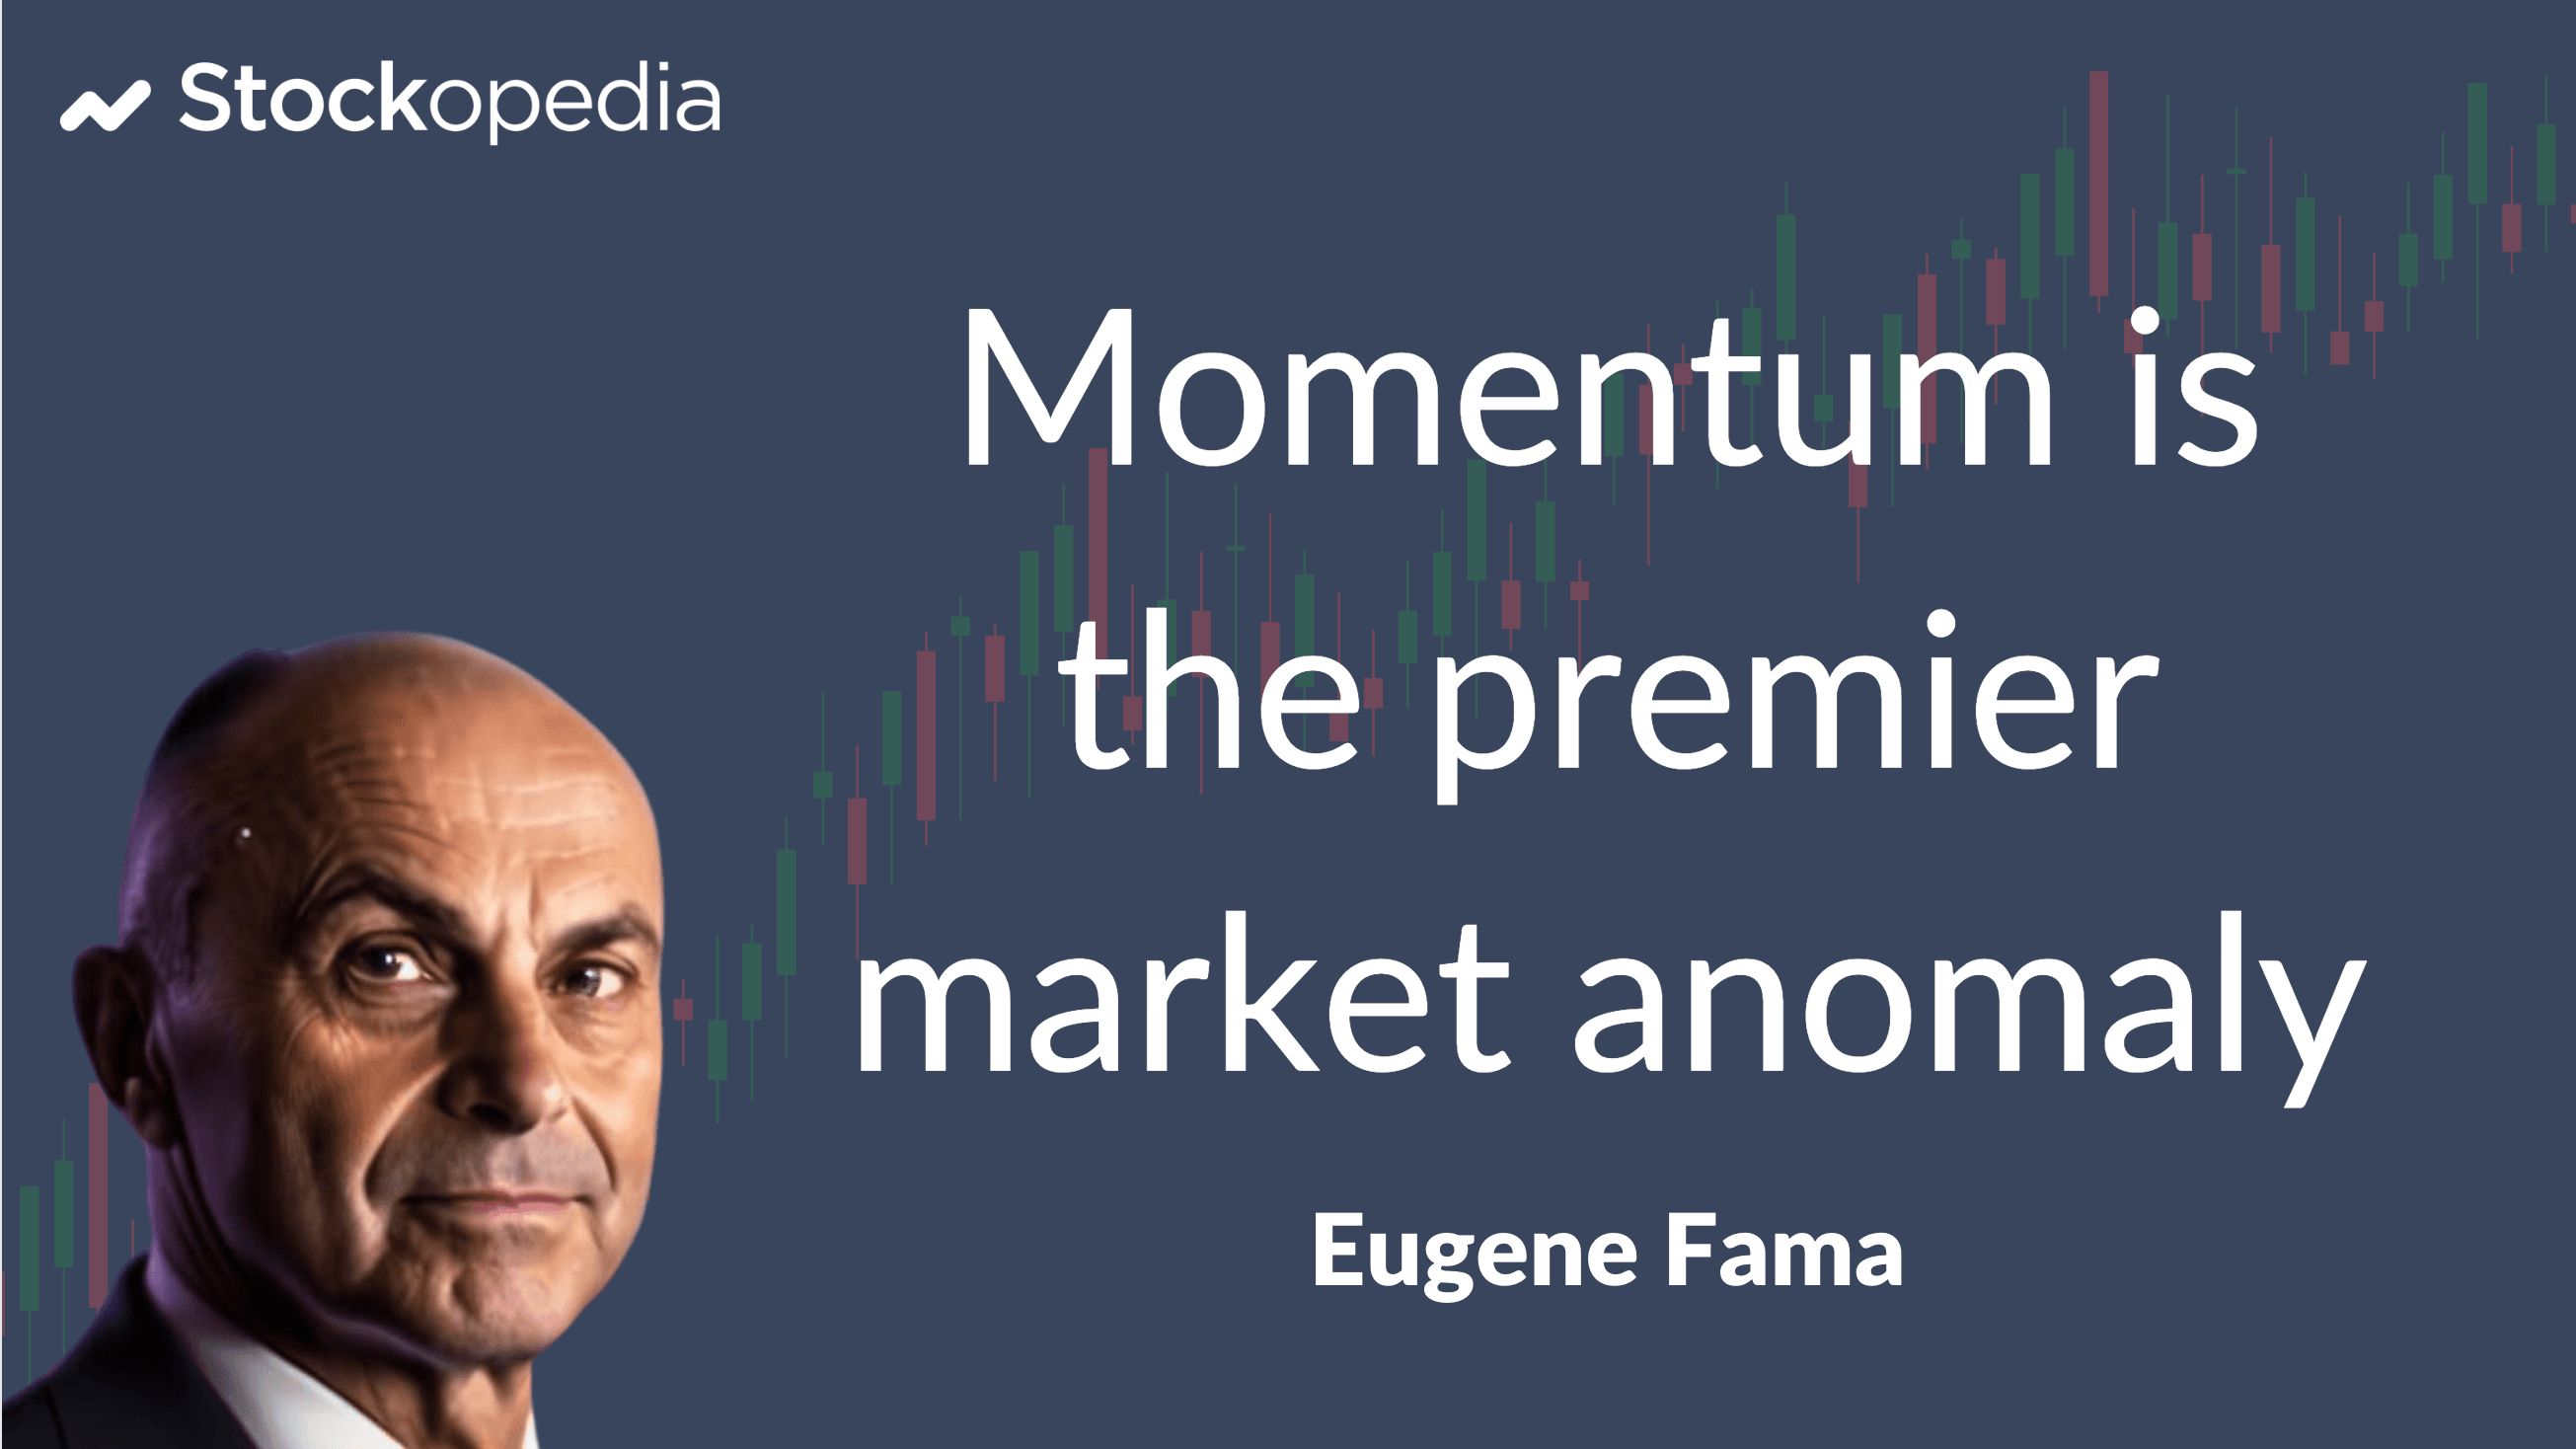 Quote - Eugene Fama - Momentum Premier Anomaly